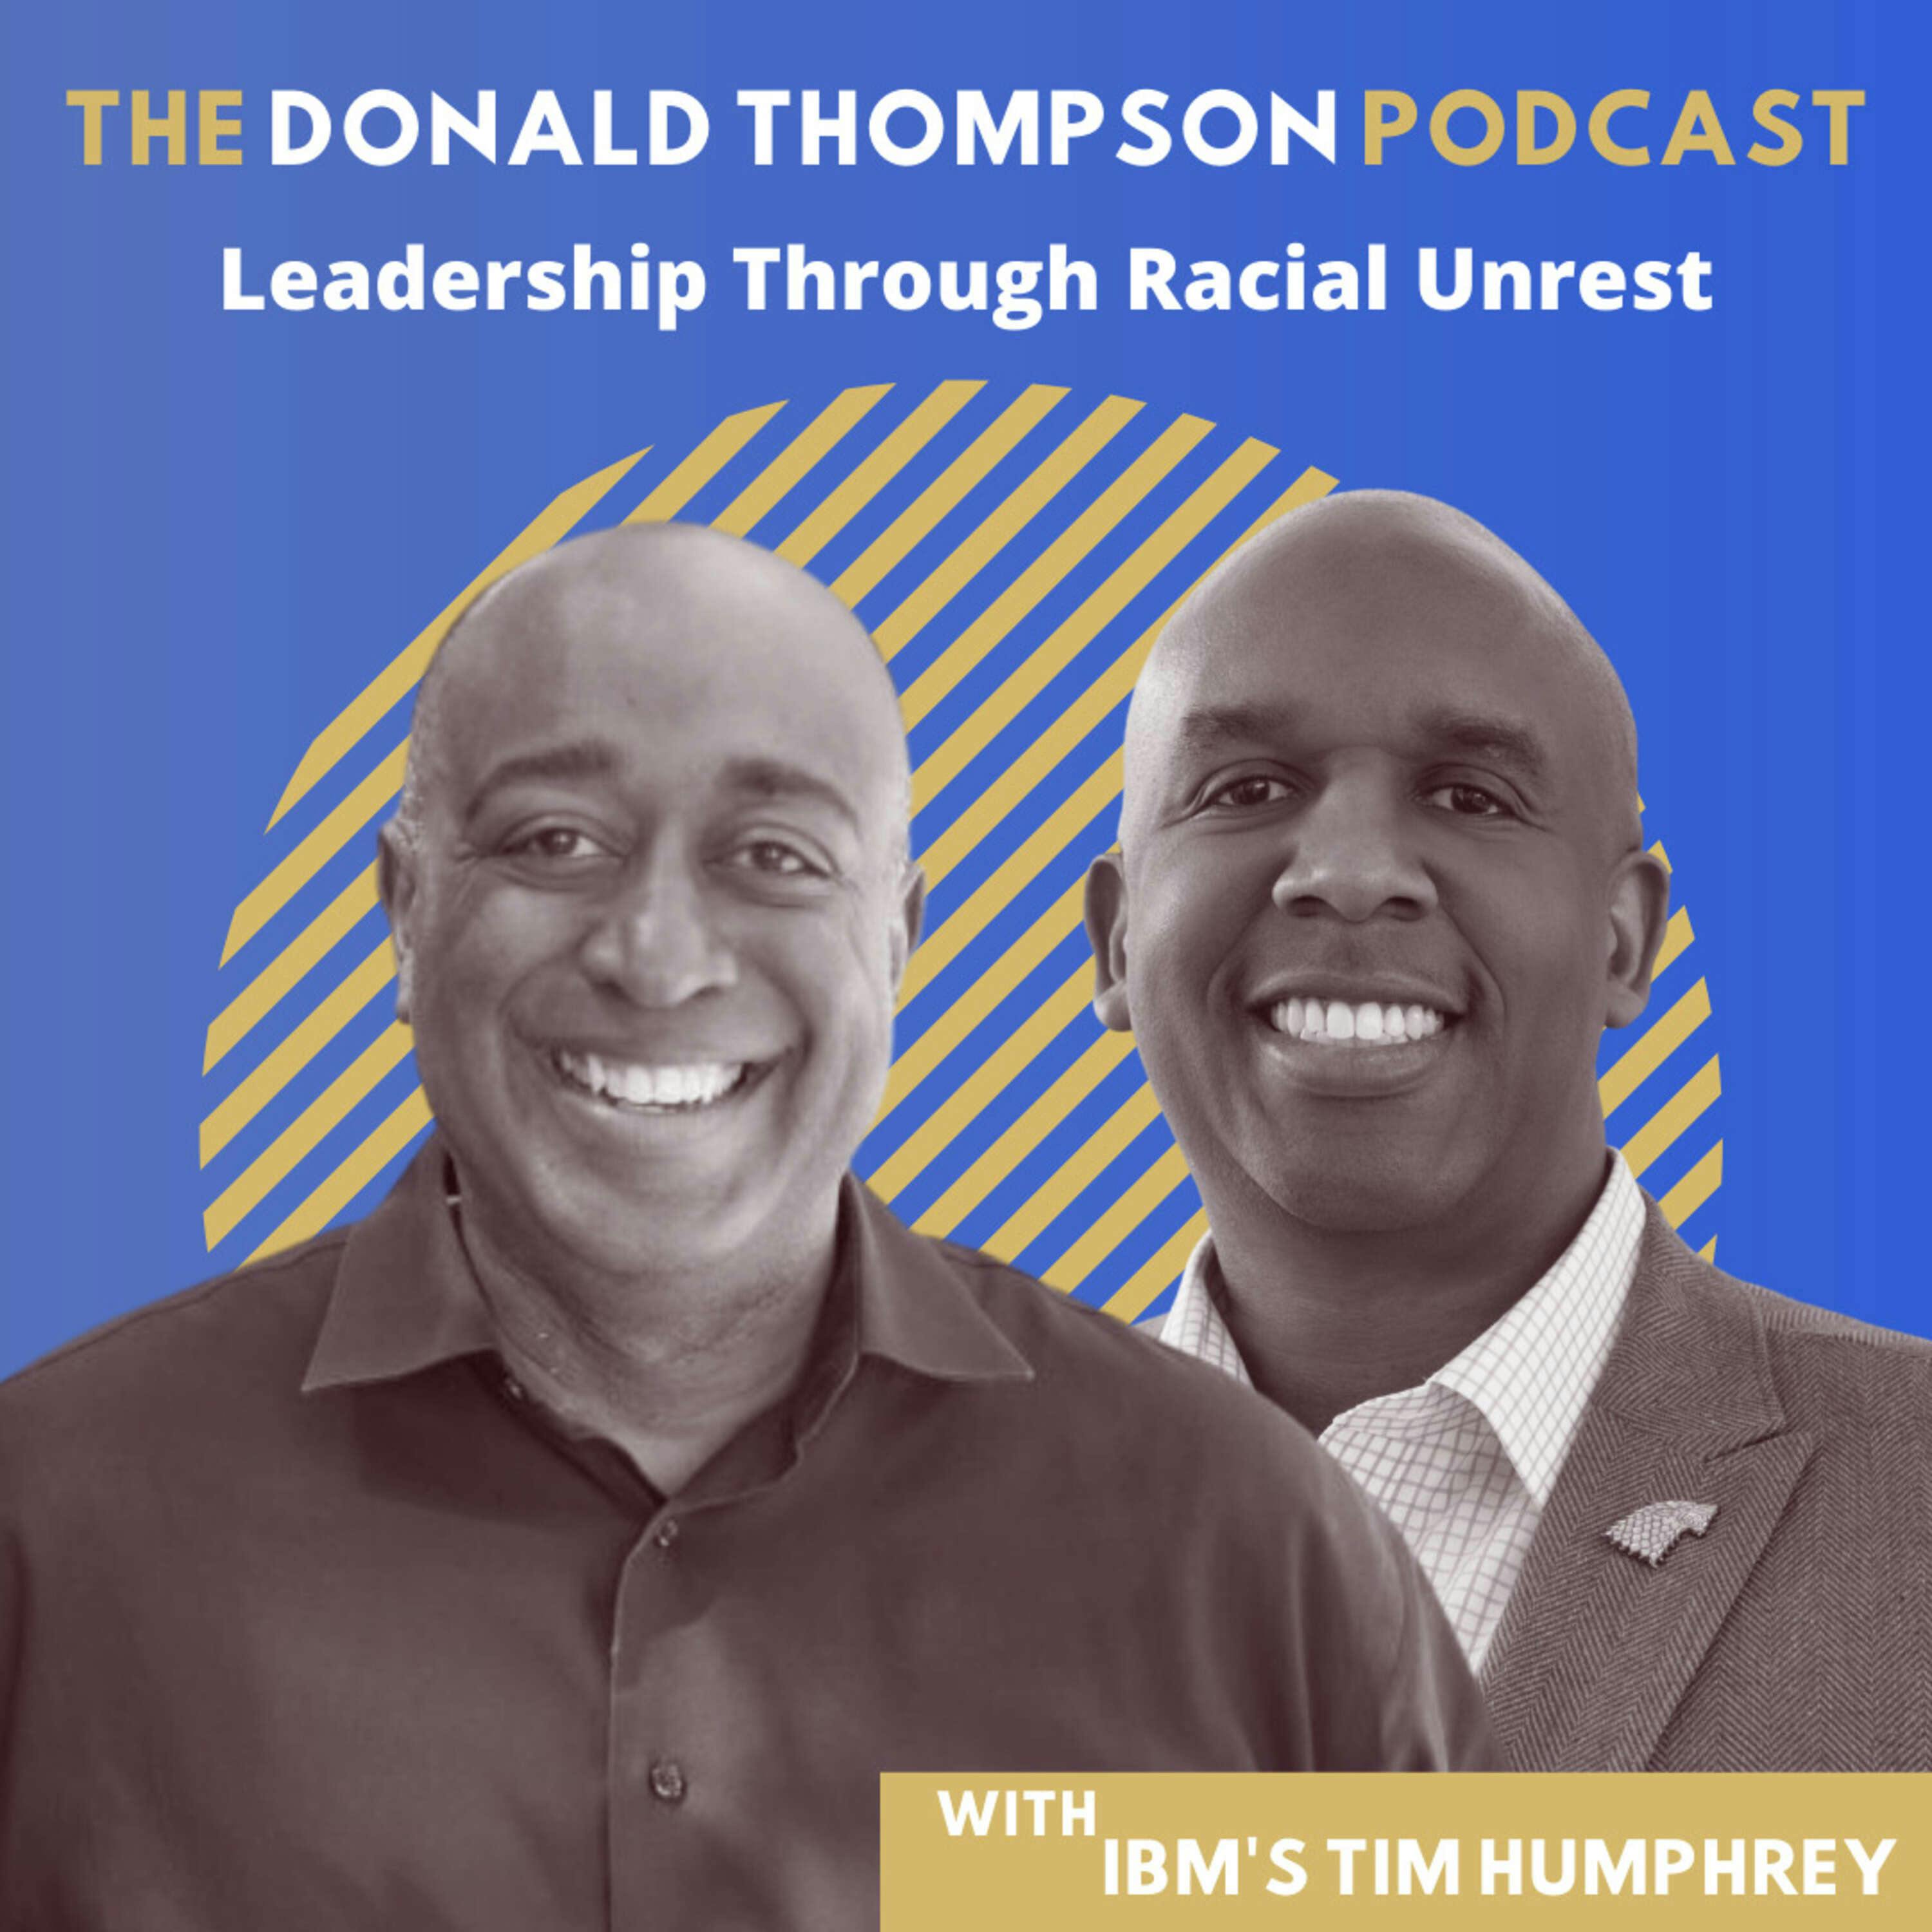 Leadership Through Racial Unrest, with IBM's Tim Humphrey